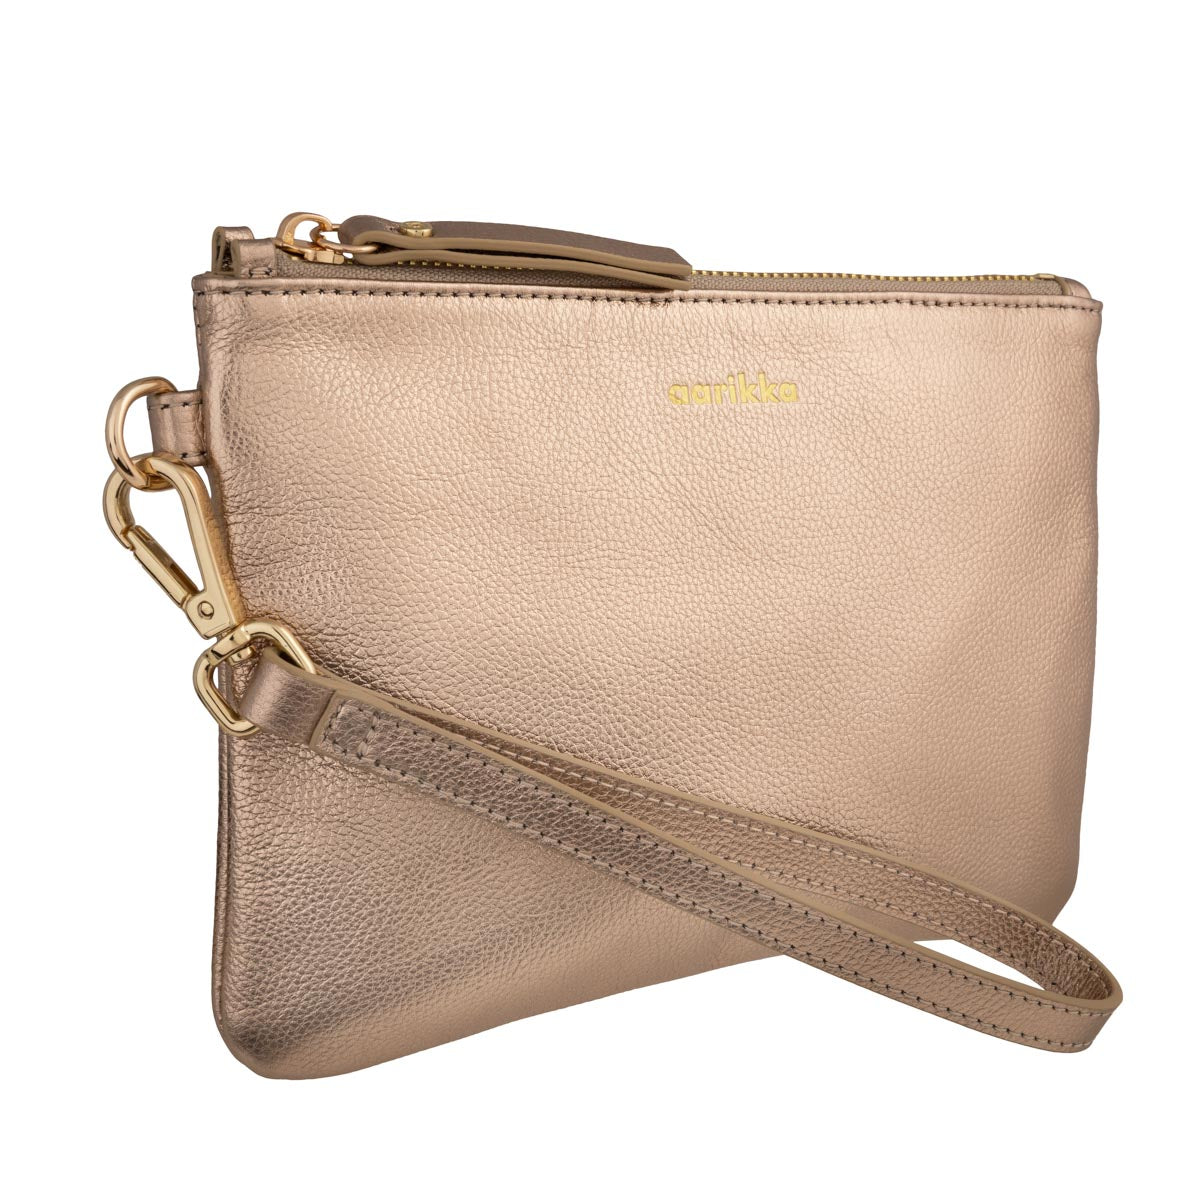 Elena hand bag, gold